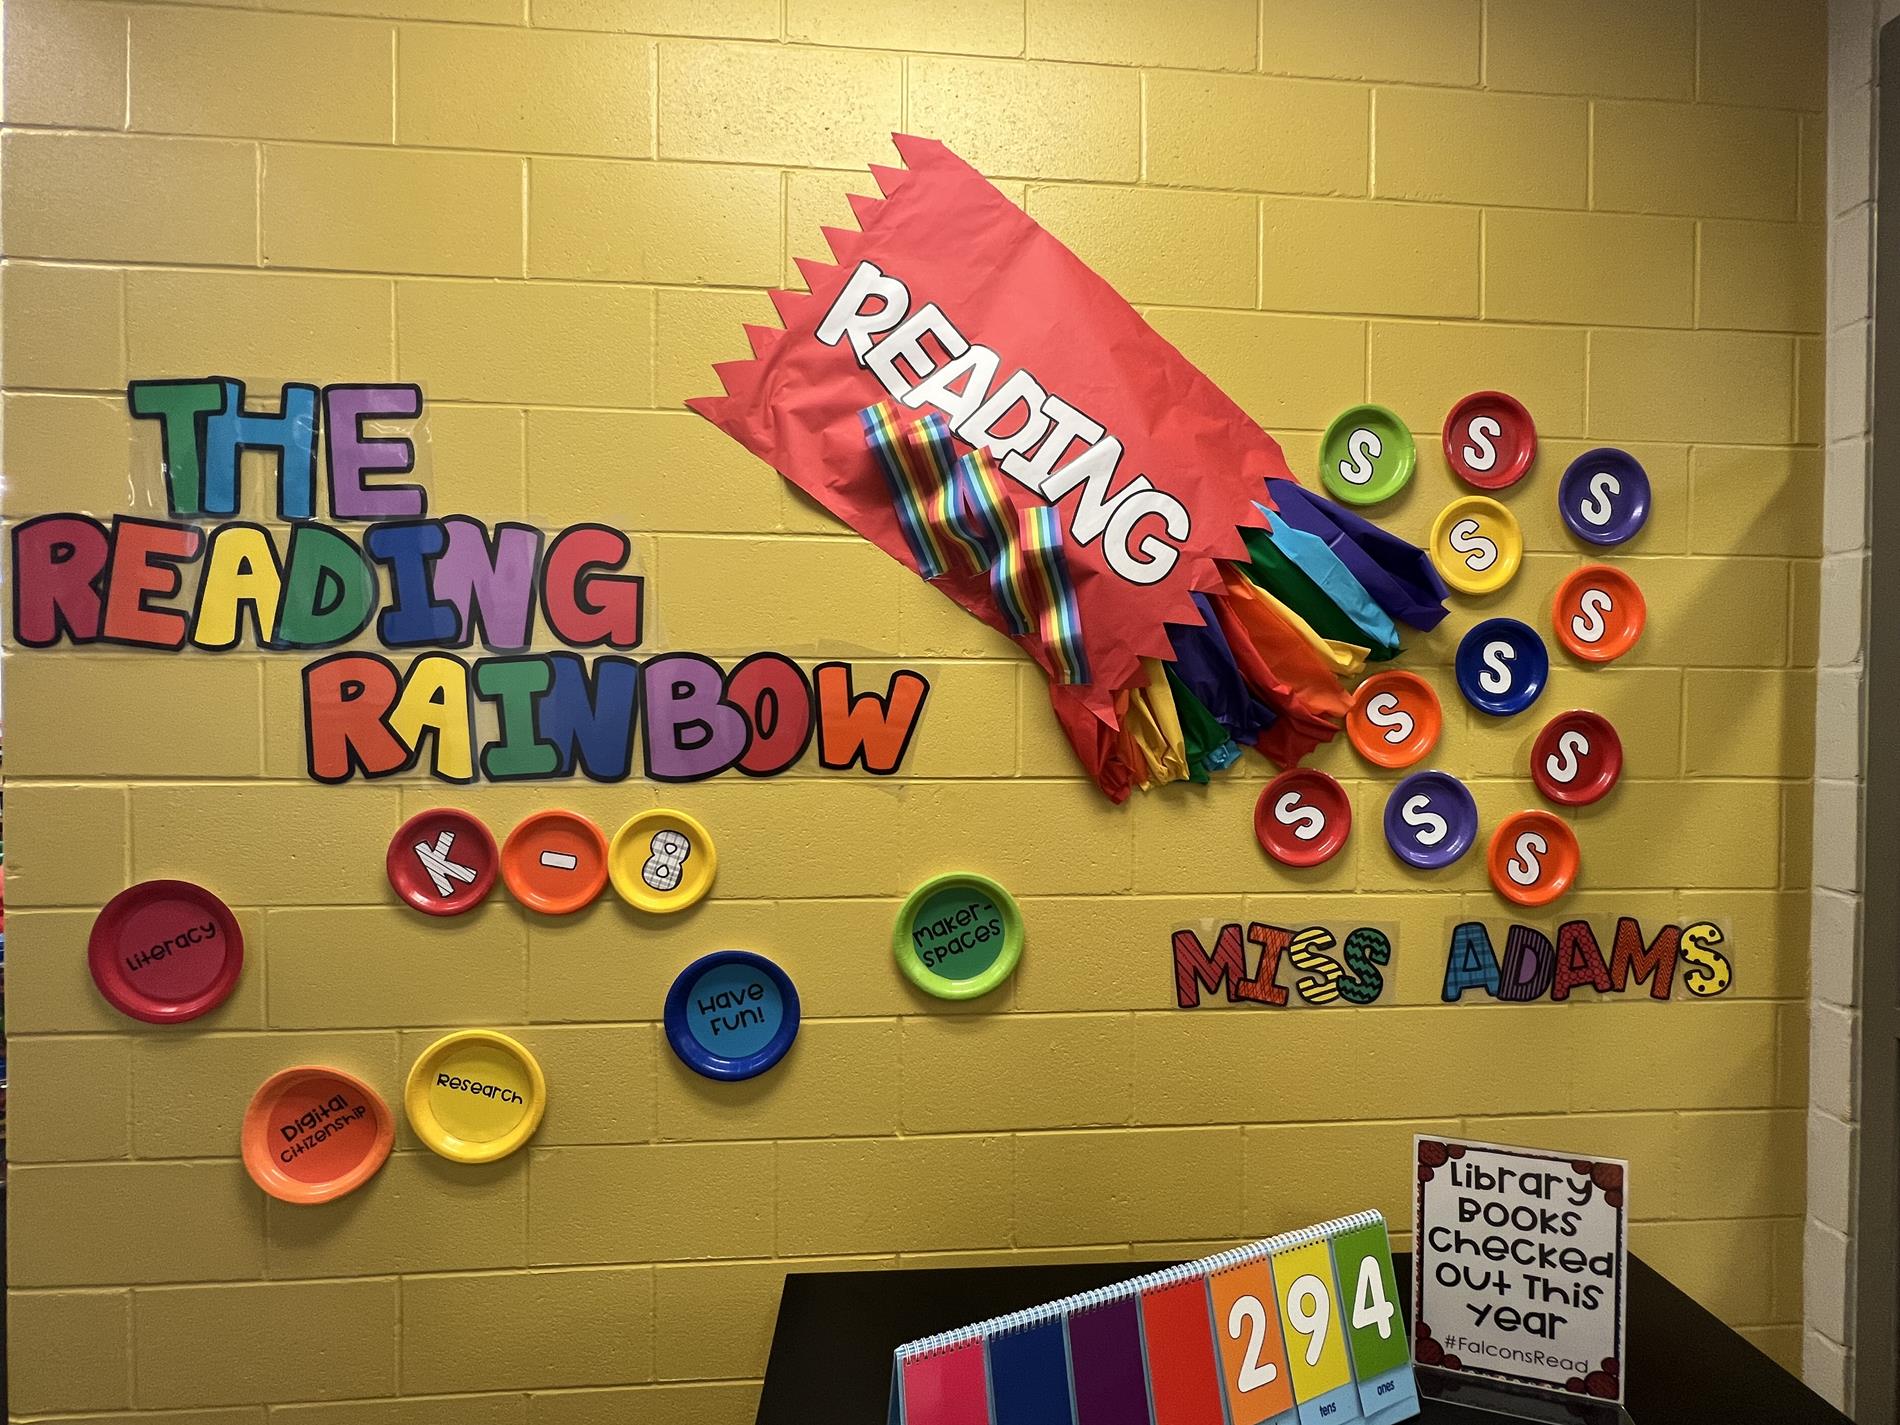 The Reading Rainbow Wall Display